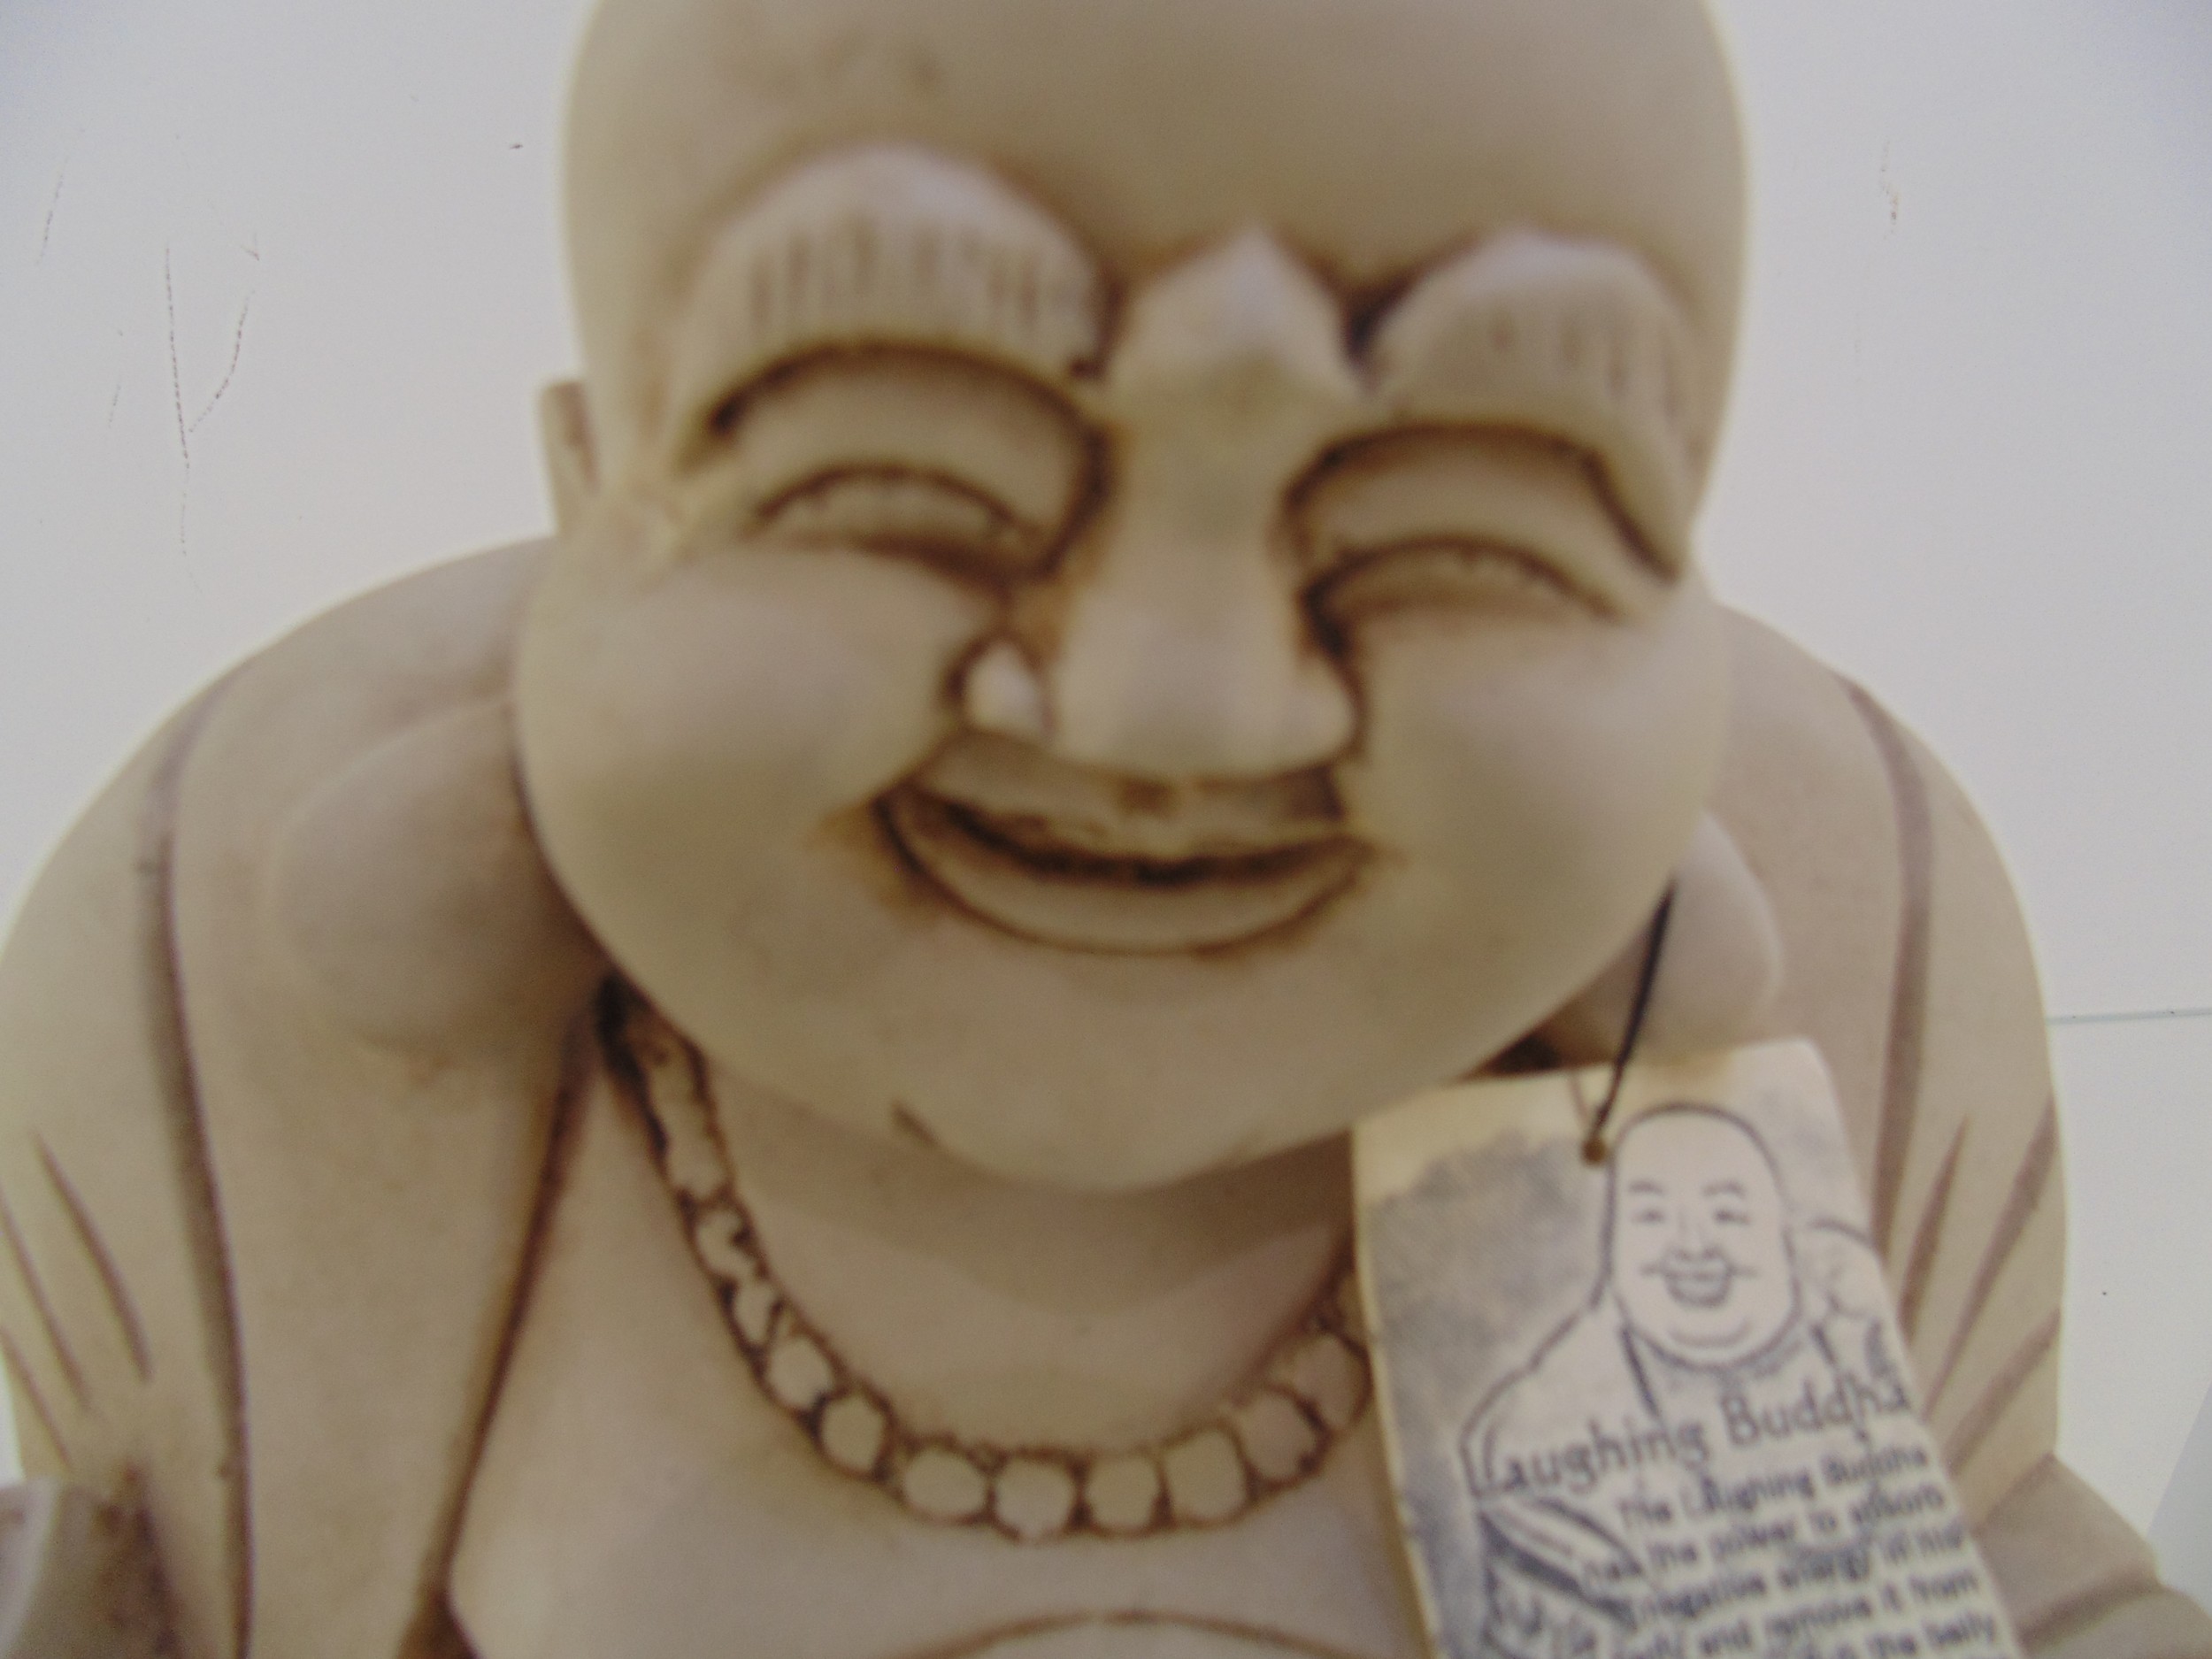 Laughing Buddha - Image 2 of 3